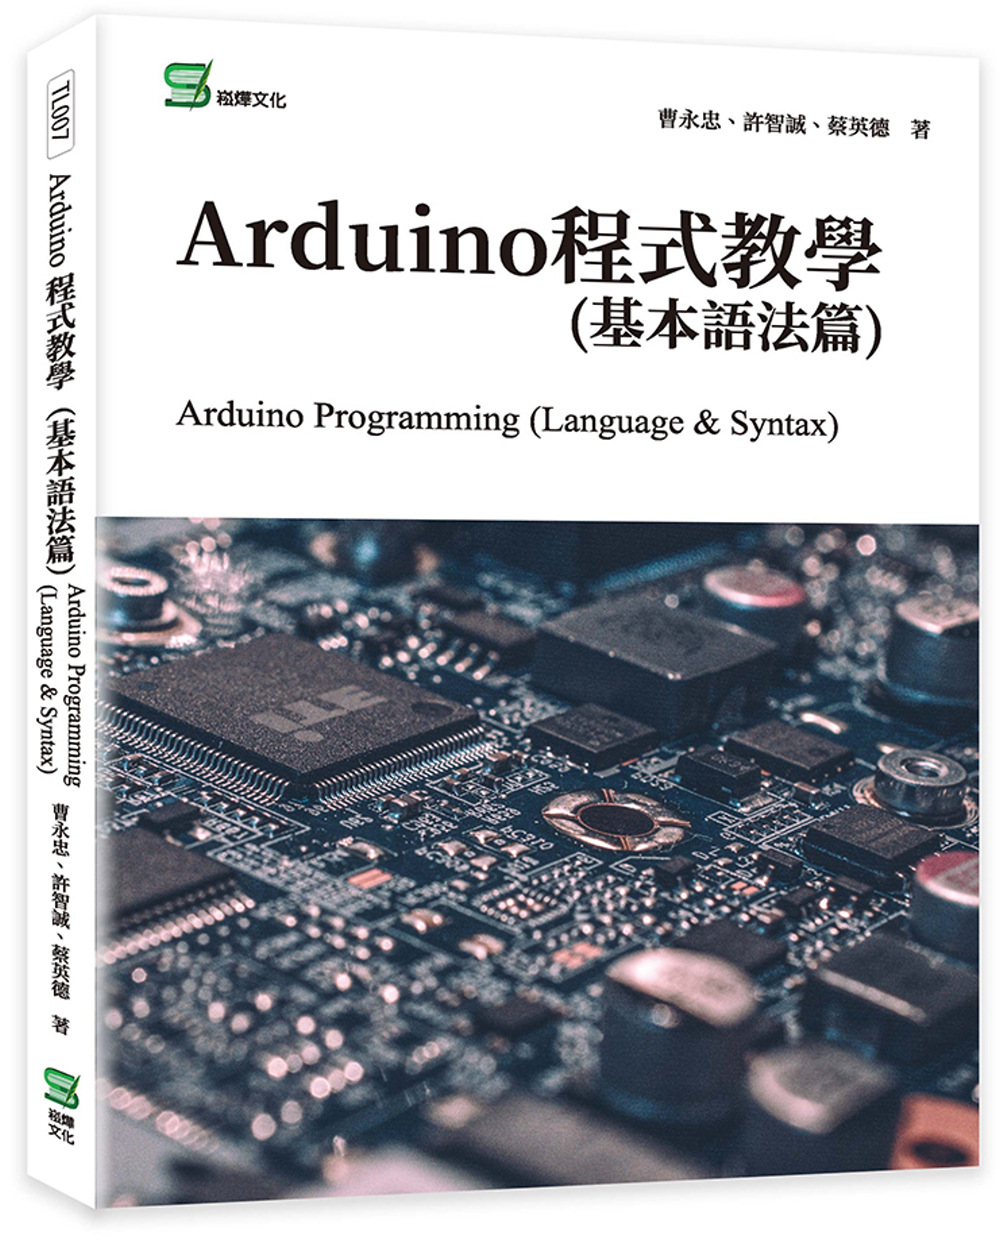 Arduino程式教學(基本語法篇)